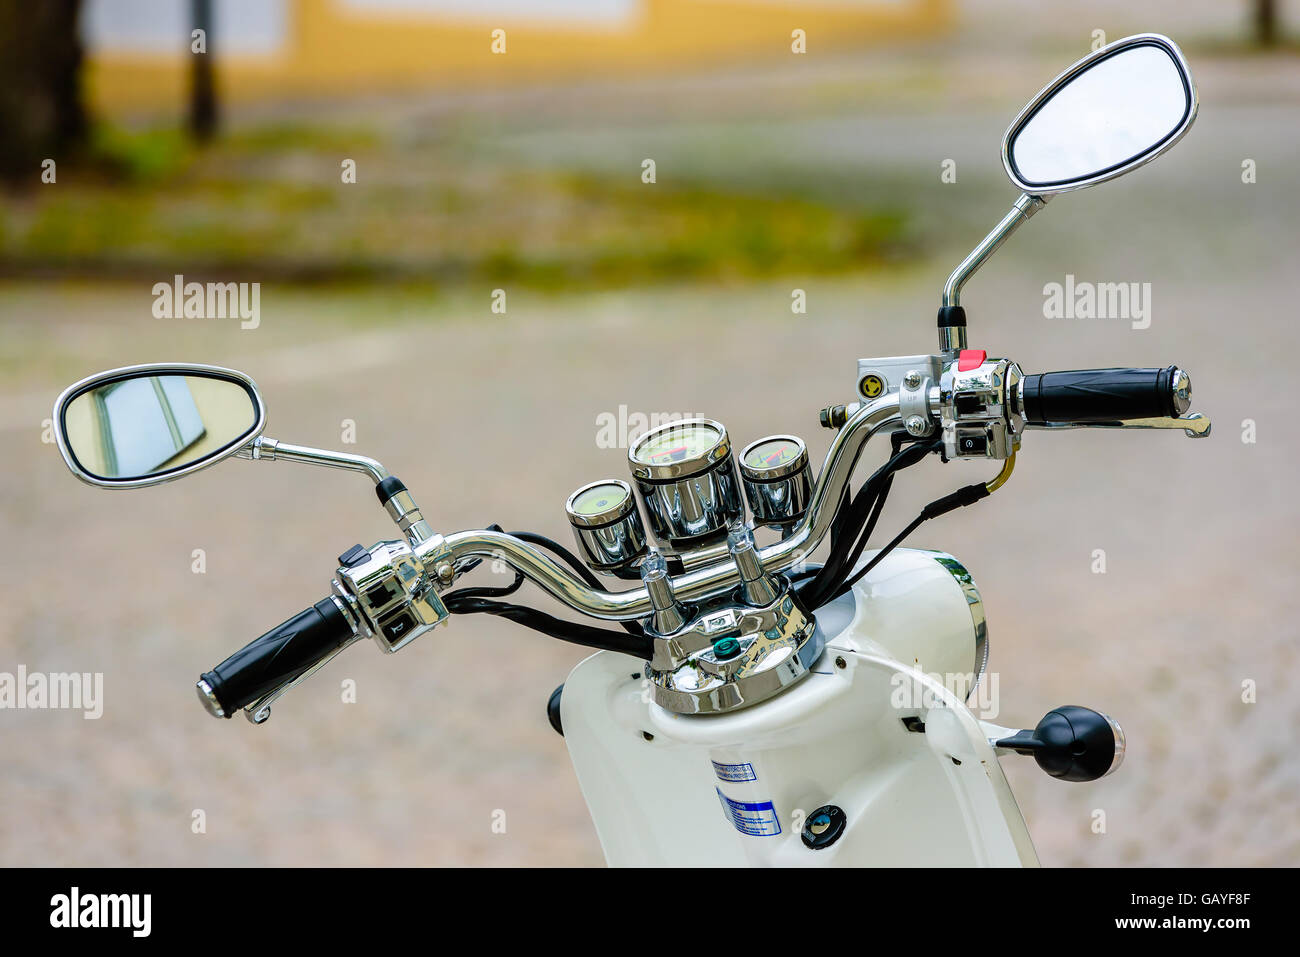 Motala, Sweden - June 21, 2016: Baotian retro 2013 moped handlebar. Window visible in one mirror. Stock Photo